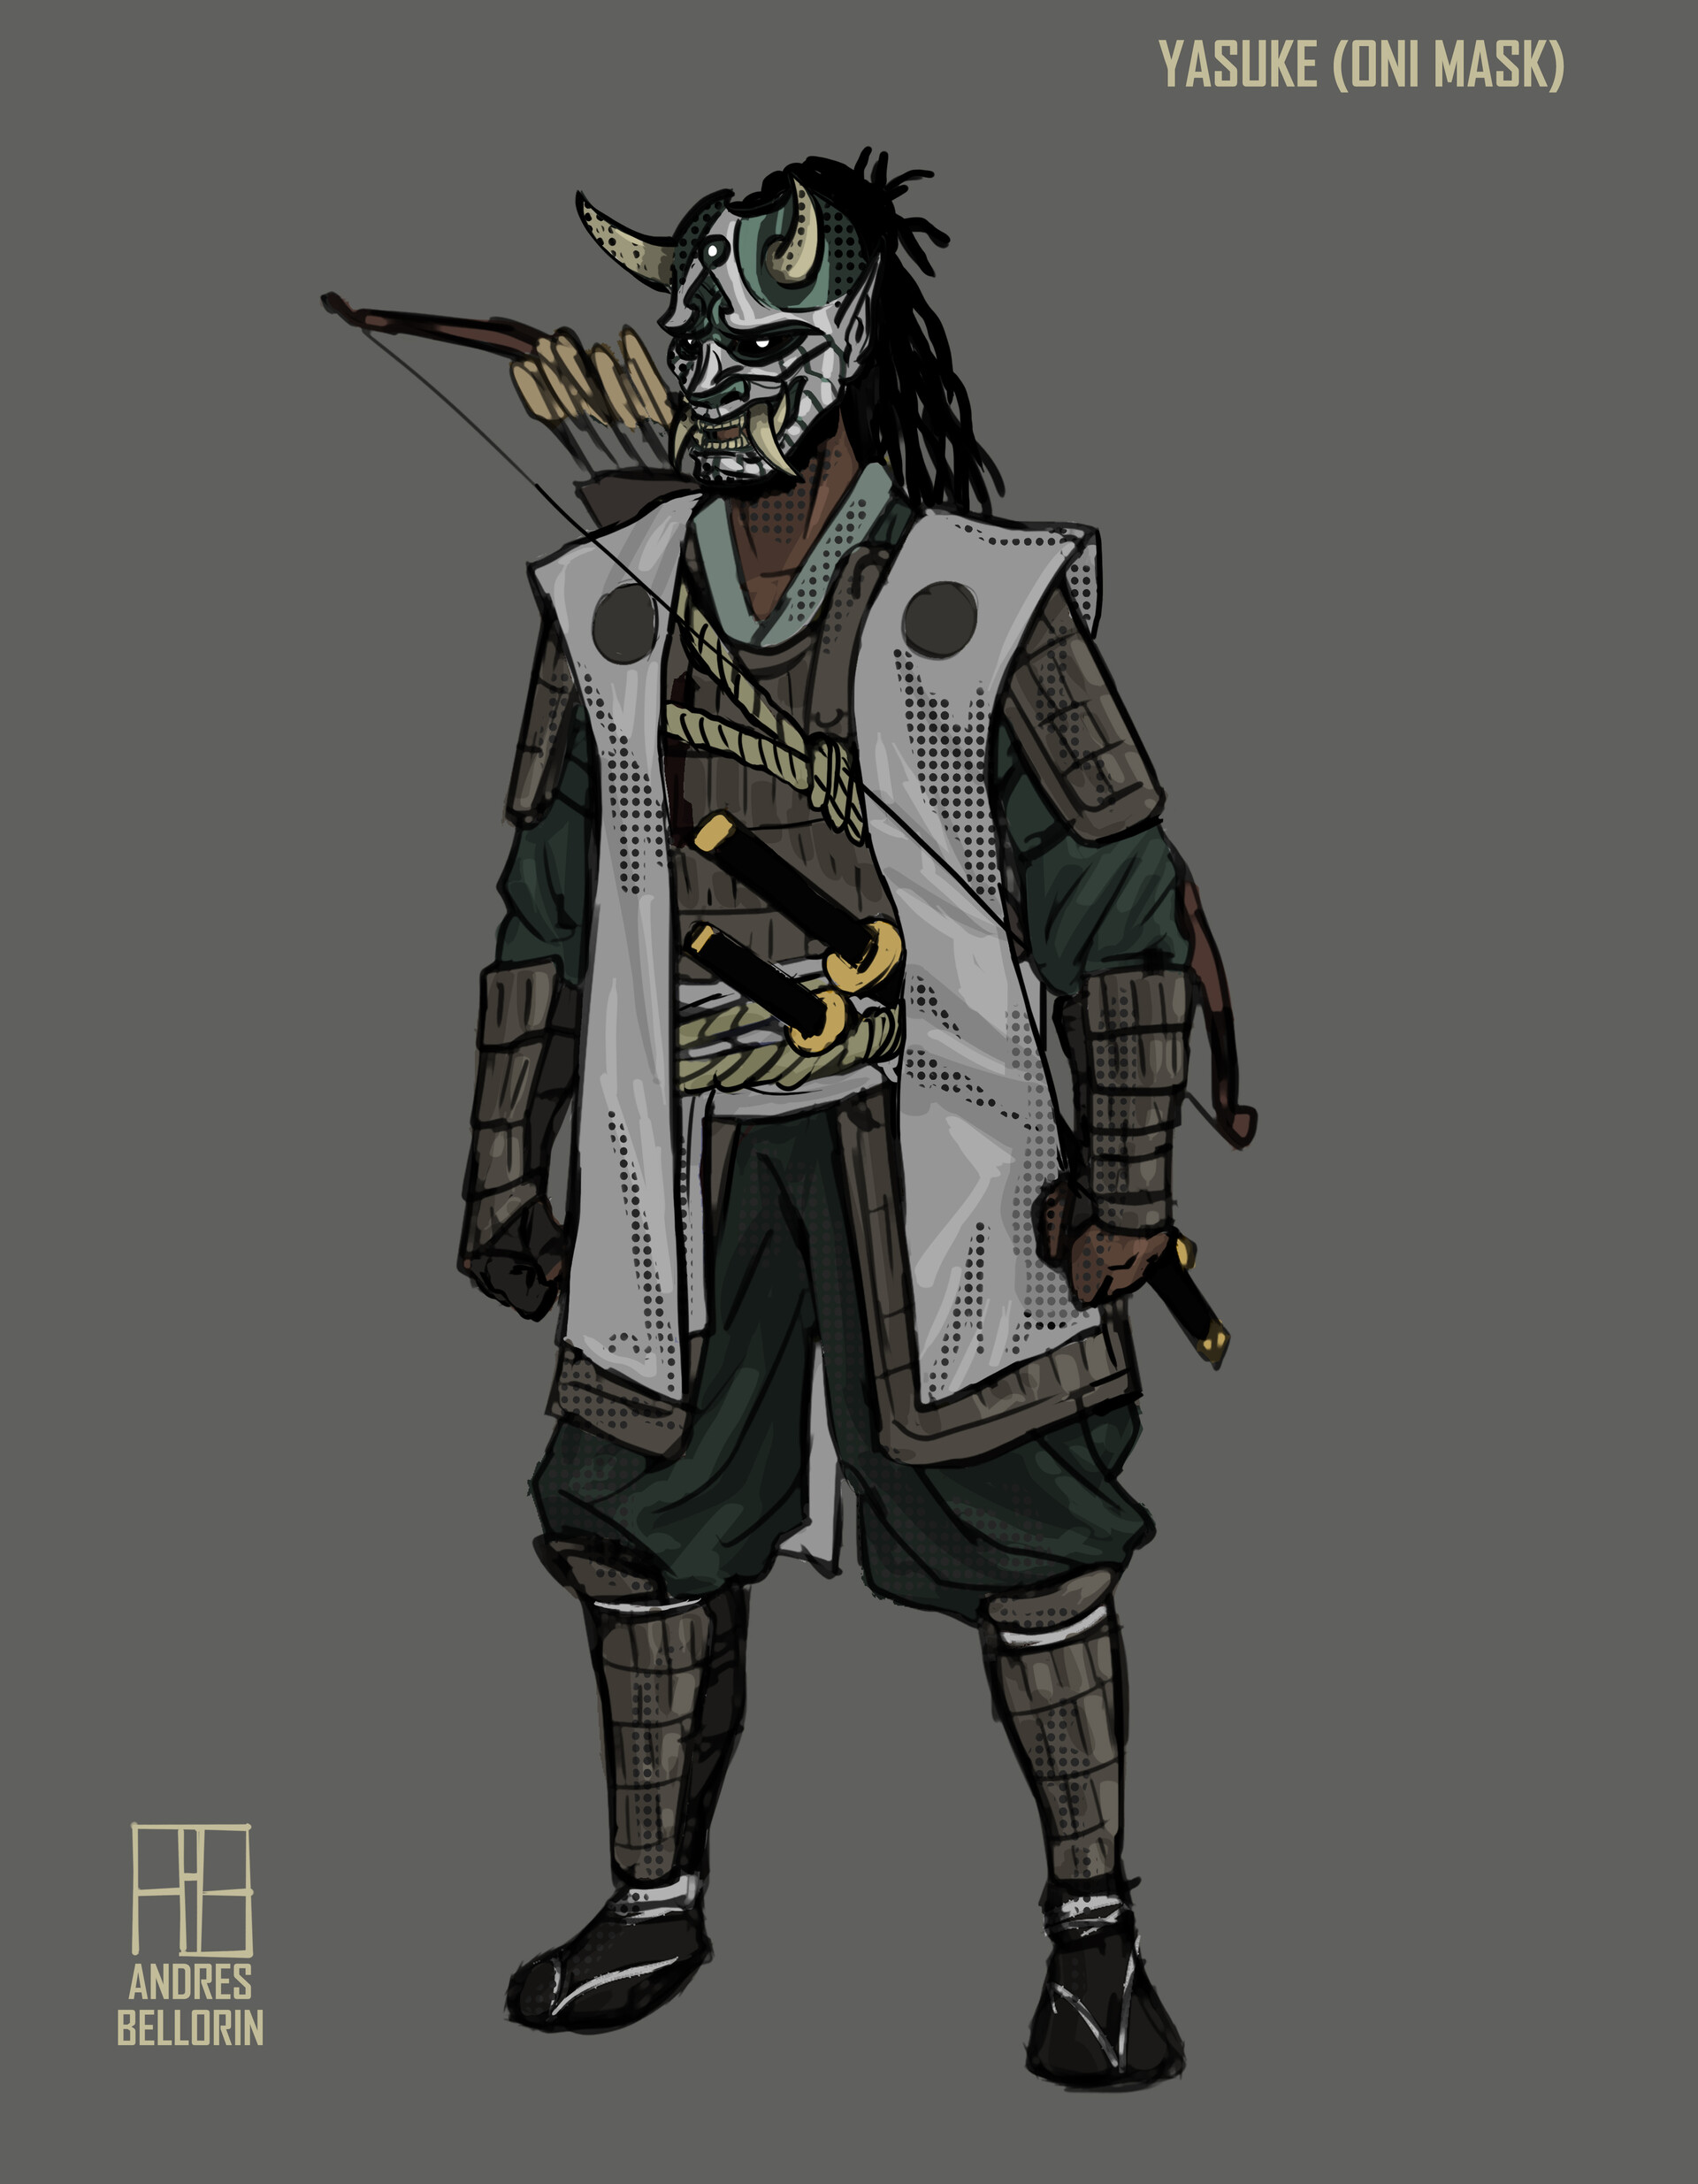 ArtStation - Oni Slayer character design